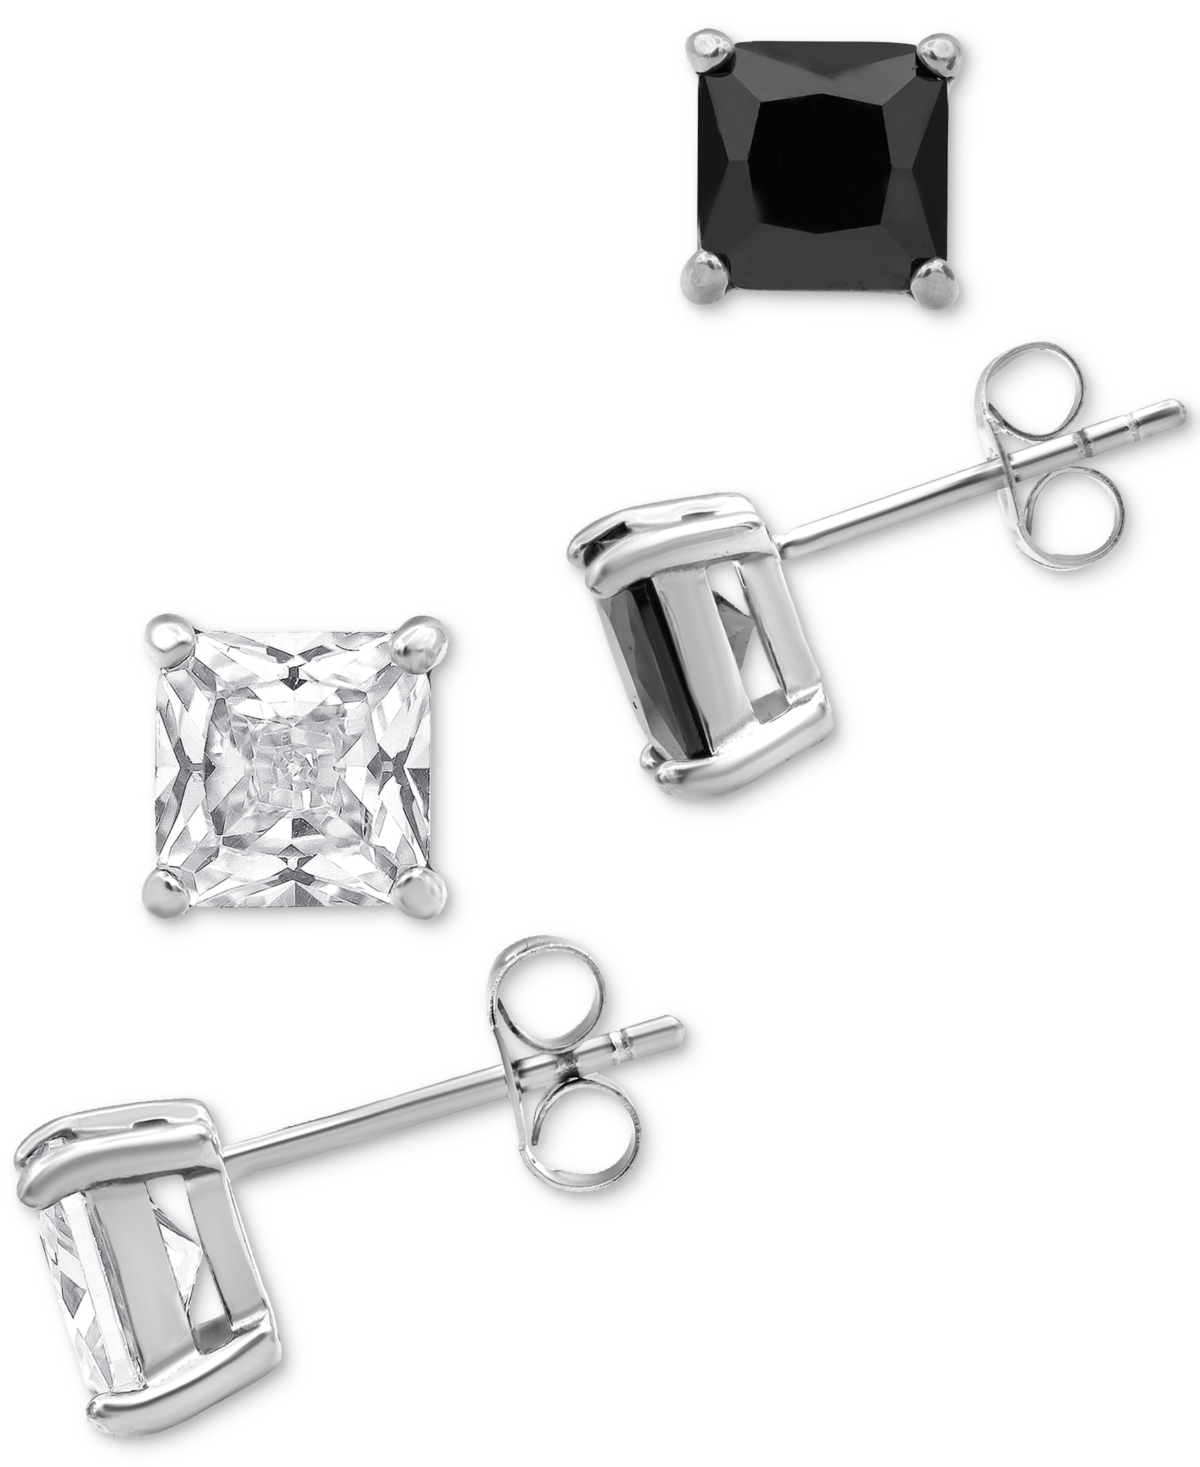 2-Pc. Set Men's Black & White Cubic Zirconia Square Stud Earrings in Stainless Steel - Black/White